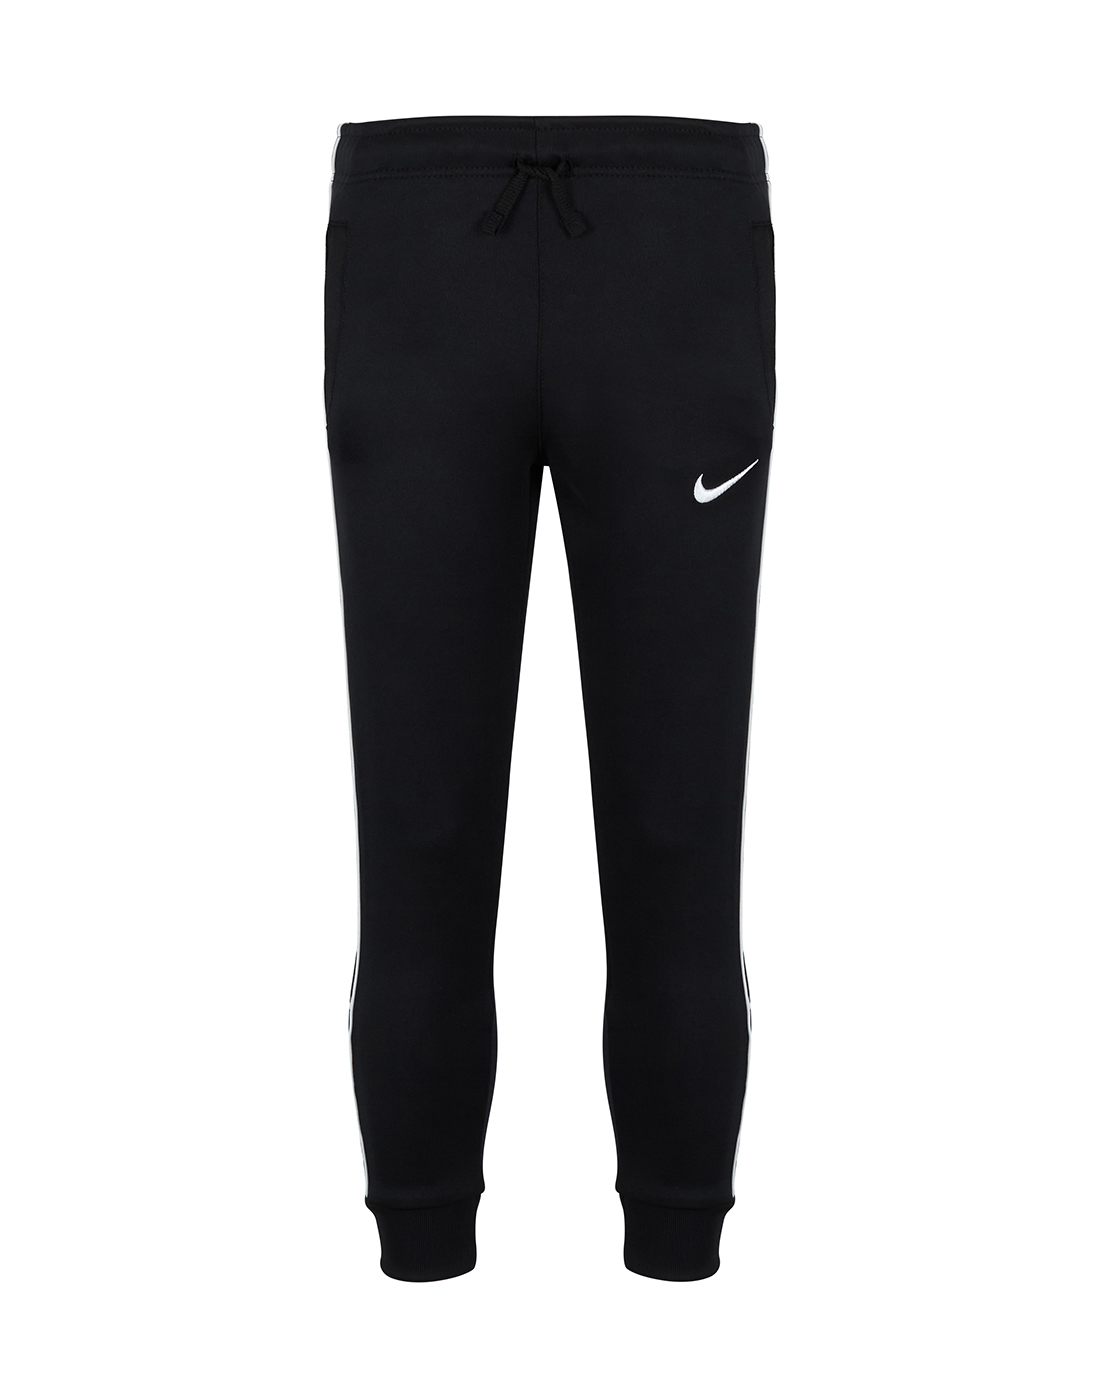 Nike Older Boys Swoosh Tape Pants - Black | Life Style Sports UK